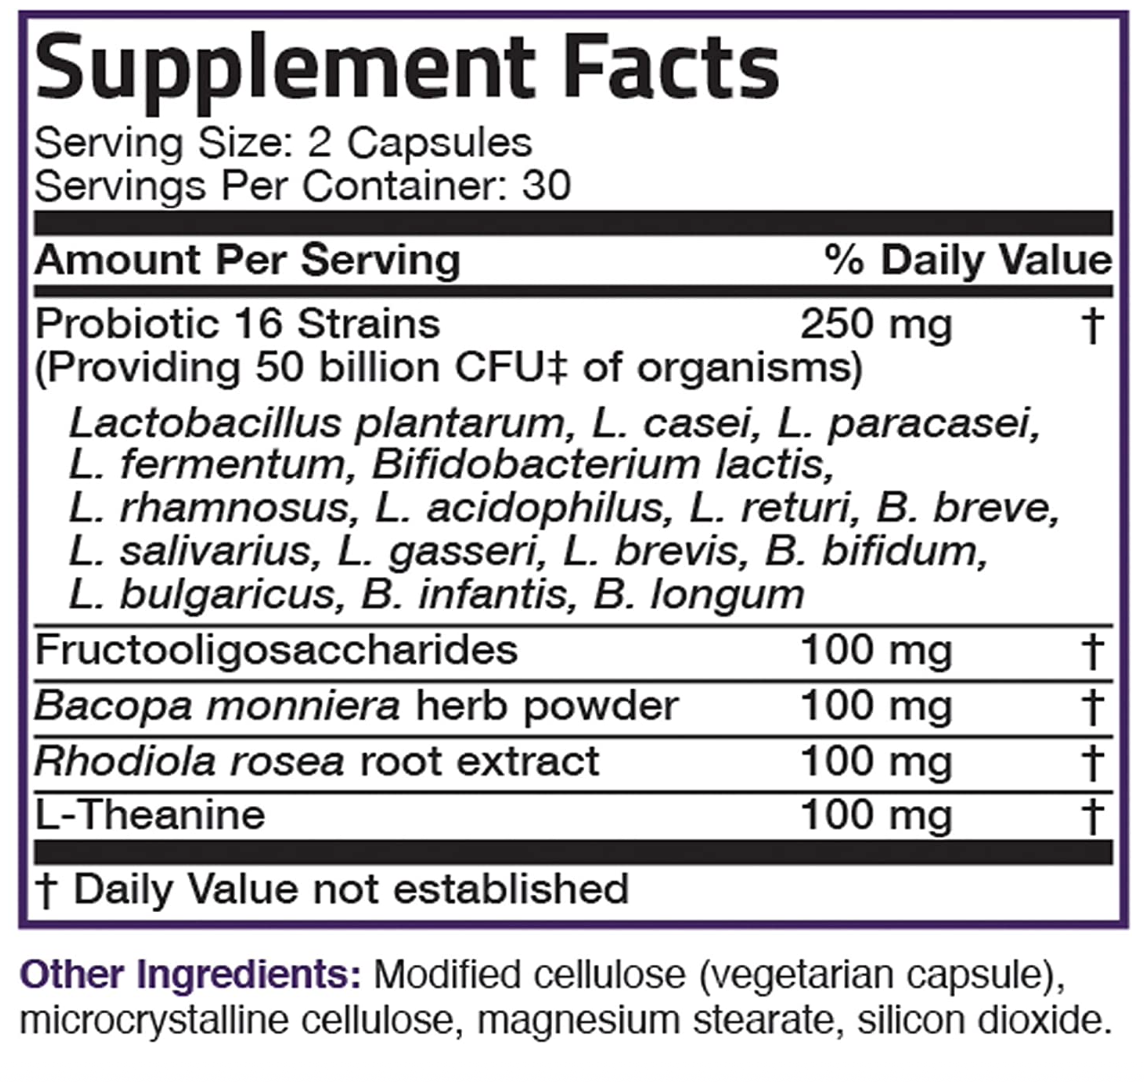 Probiotic Plus Prebiotic with L-Theanine, Bacopa & Rhodiola - 50 Billion CFU - 60 Vegetarian Capsules